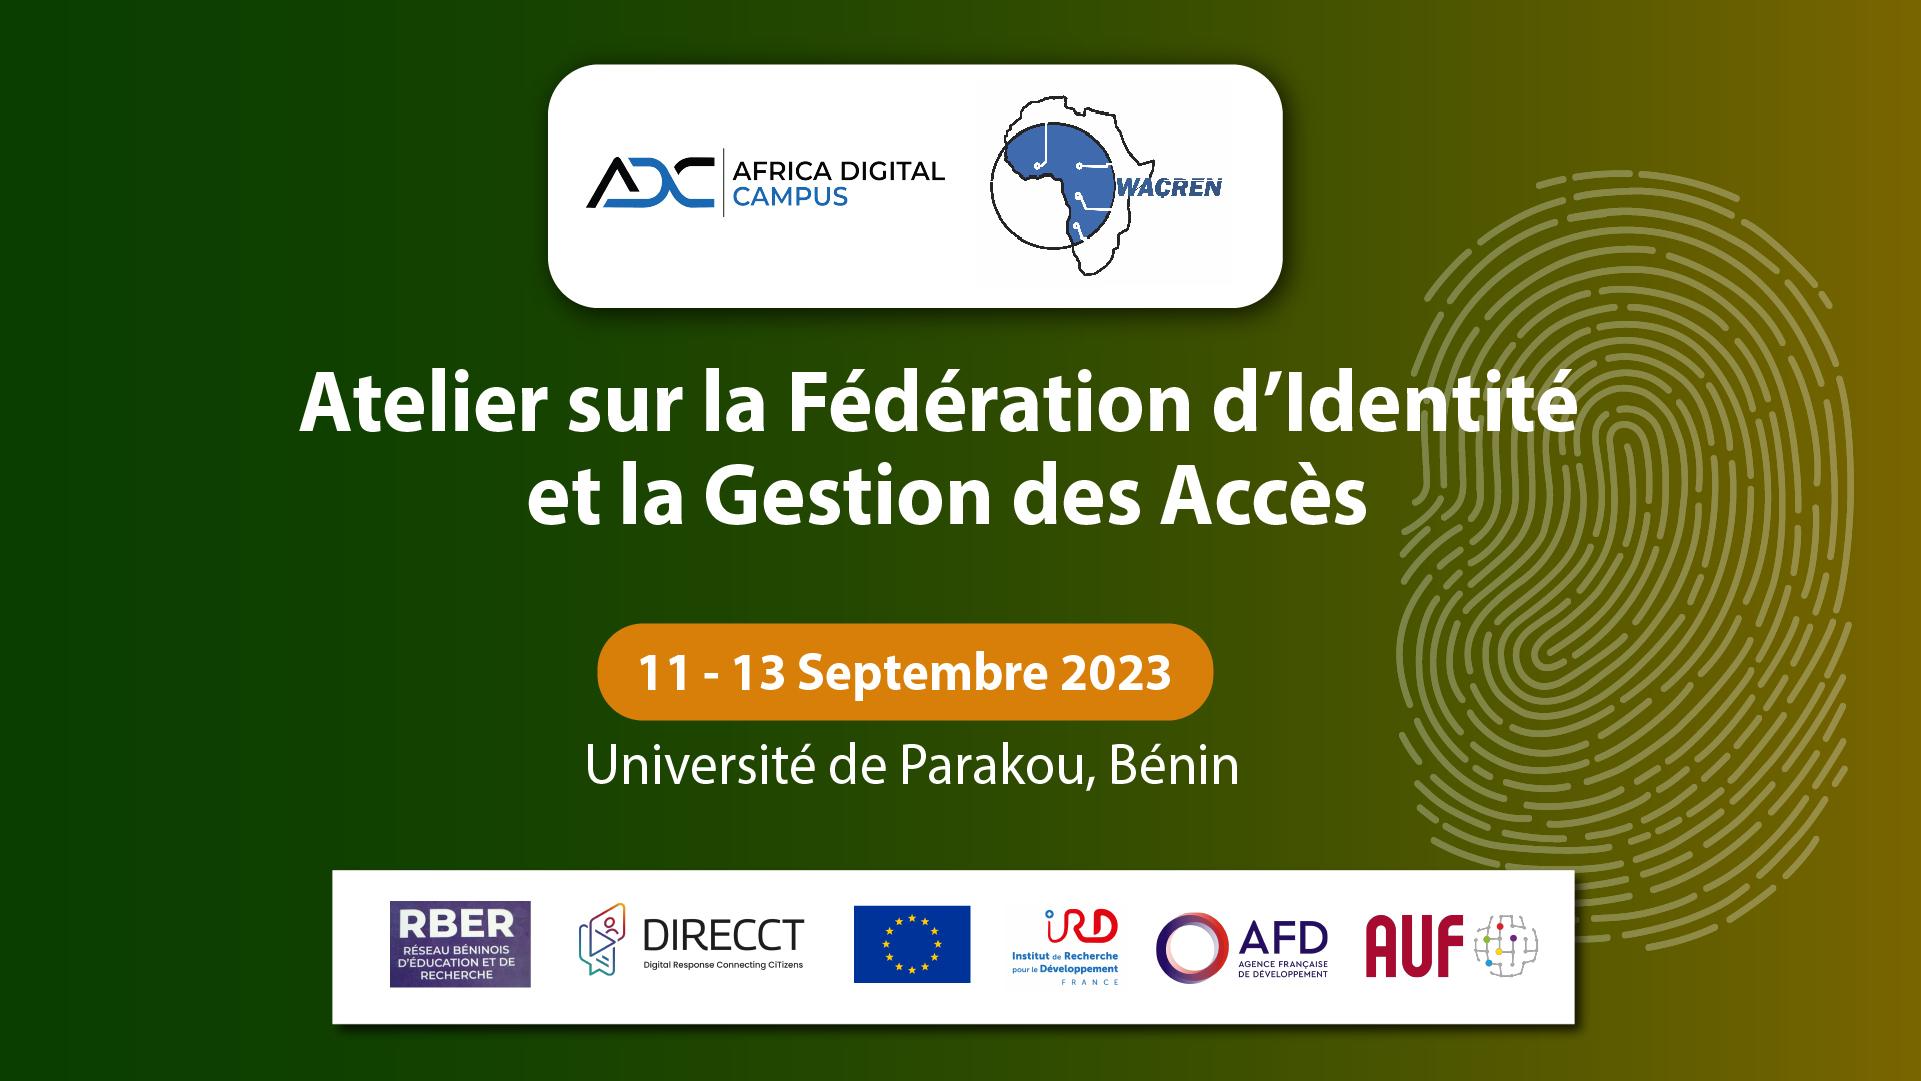 Parakou University to host next workshop on Identity Federation & Access Management